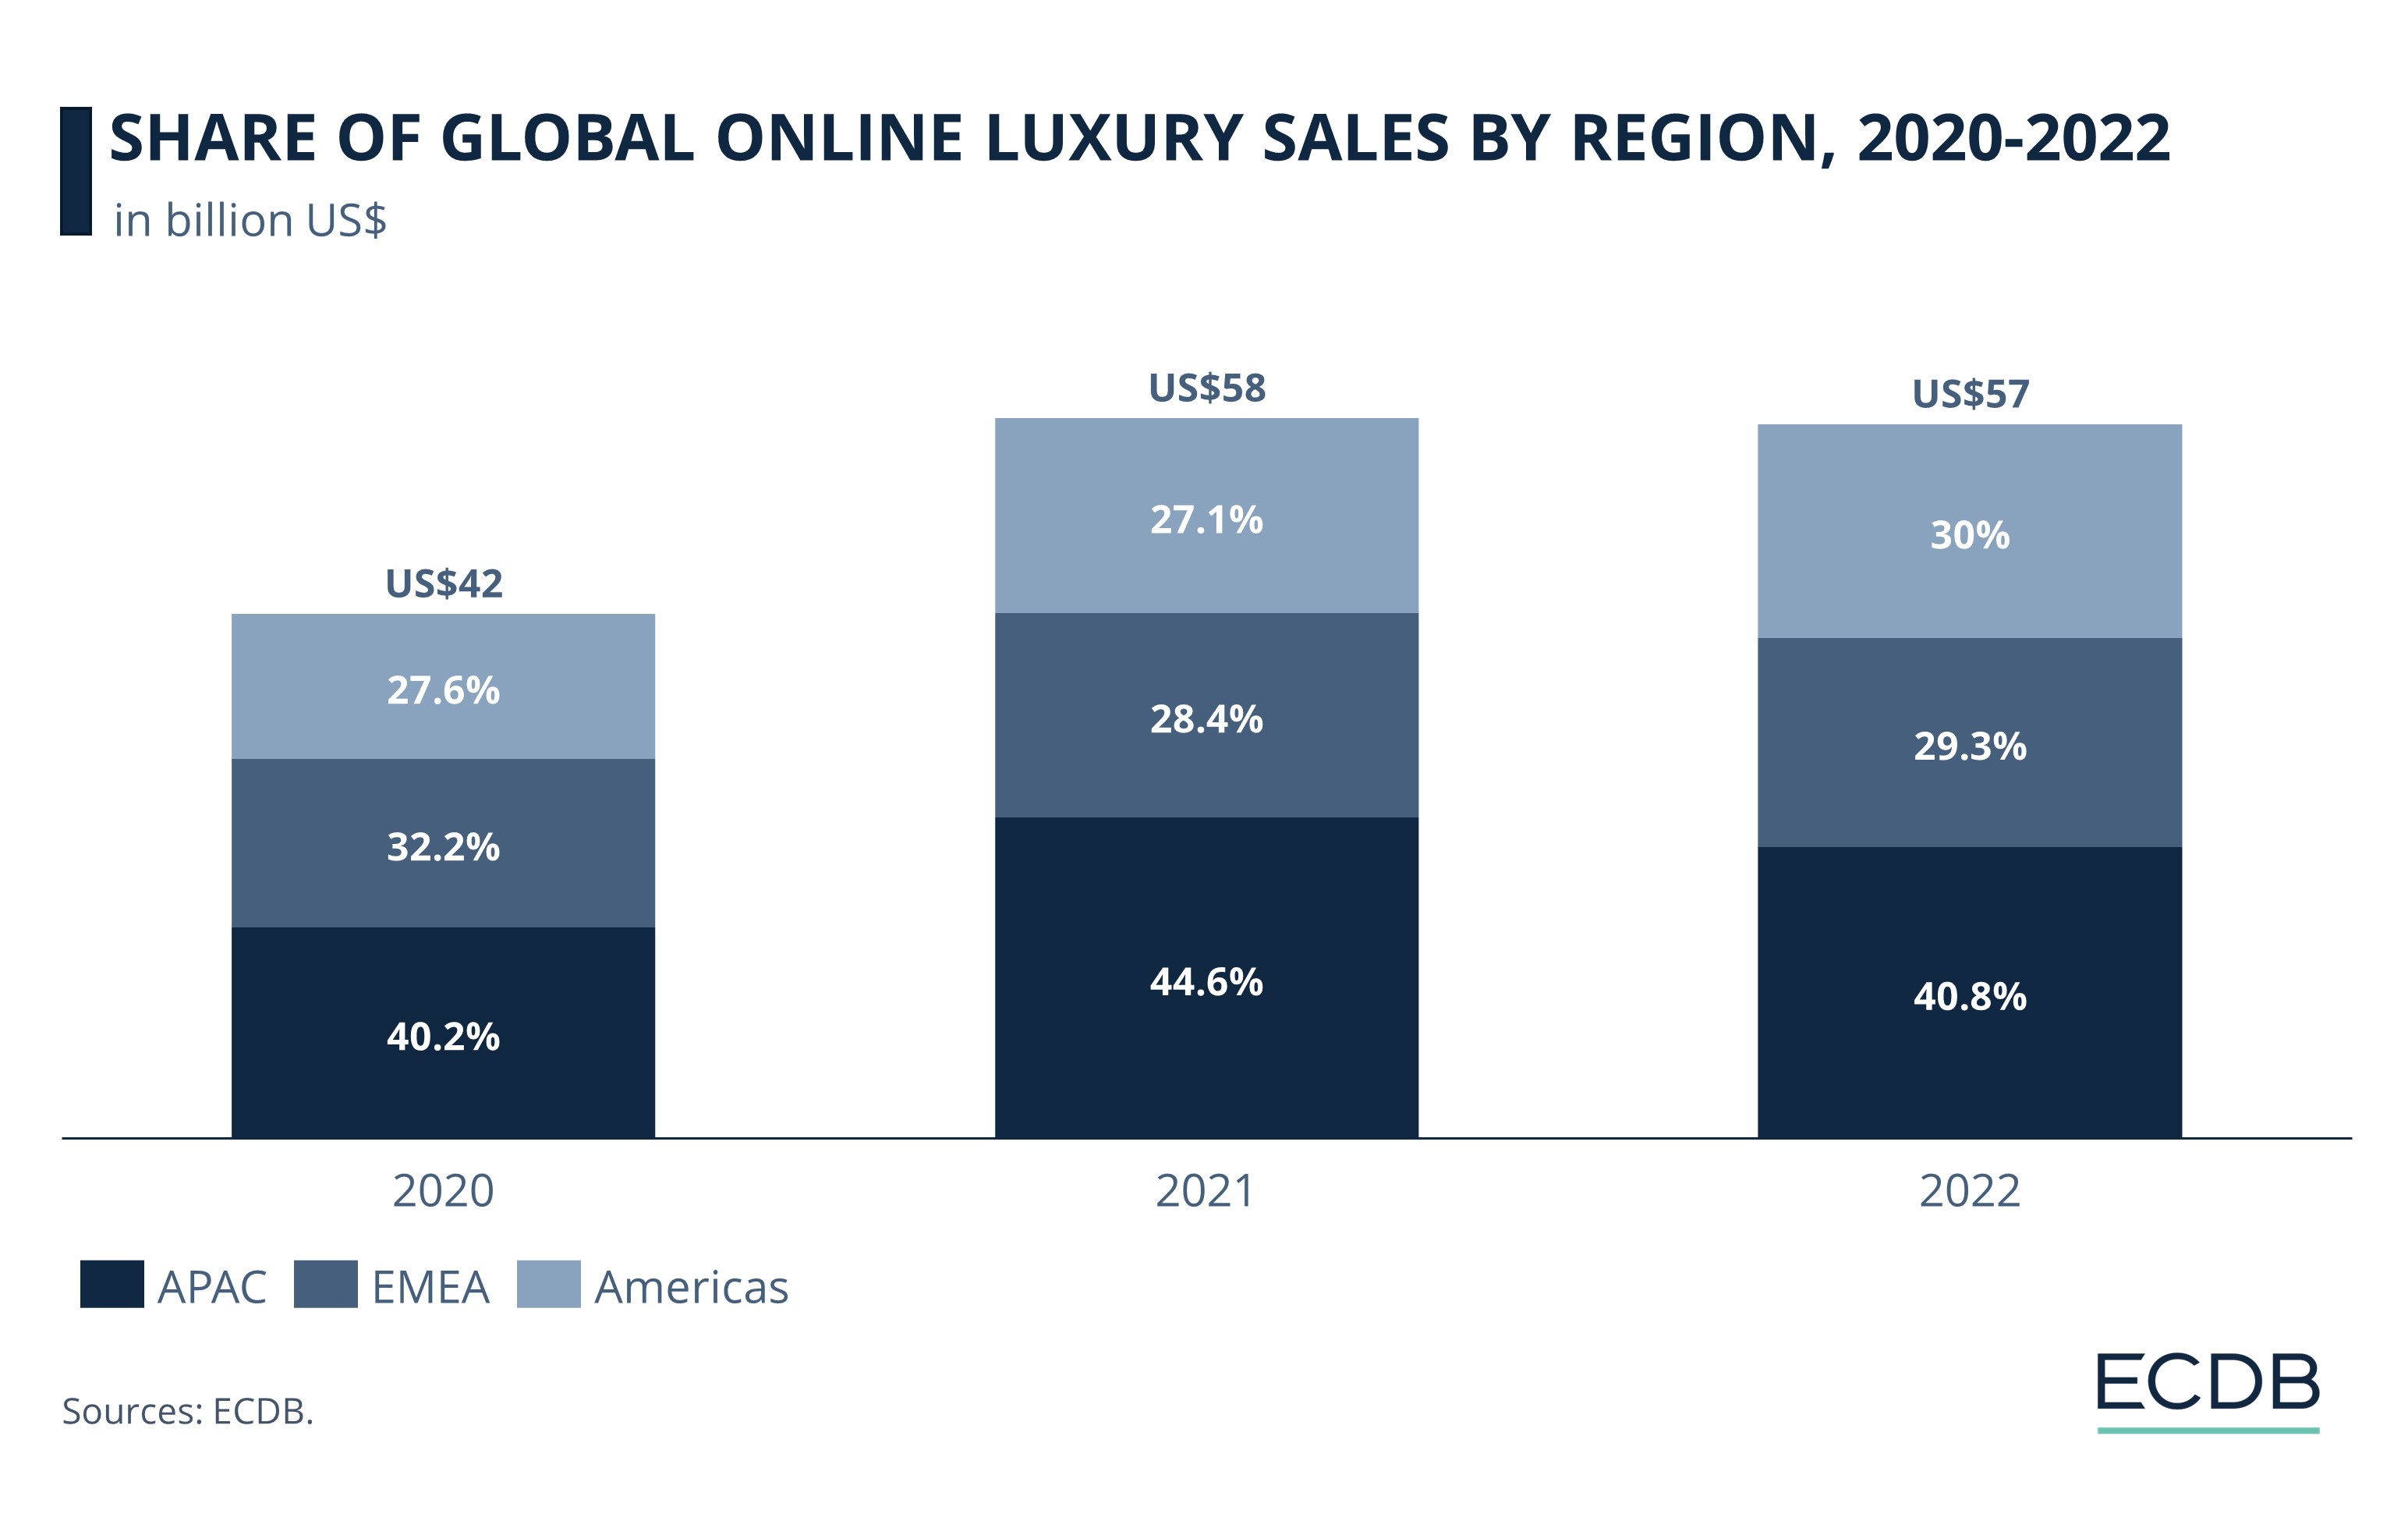 Share of Global Online Luxury Sales by Region, 2020-2022